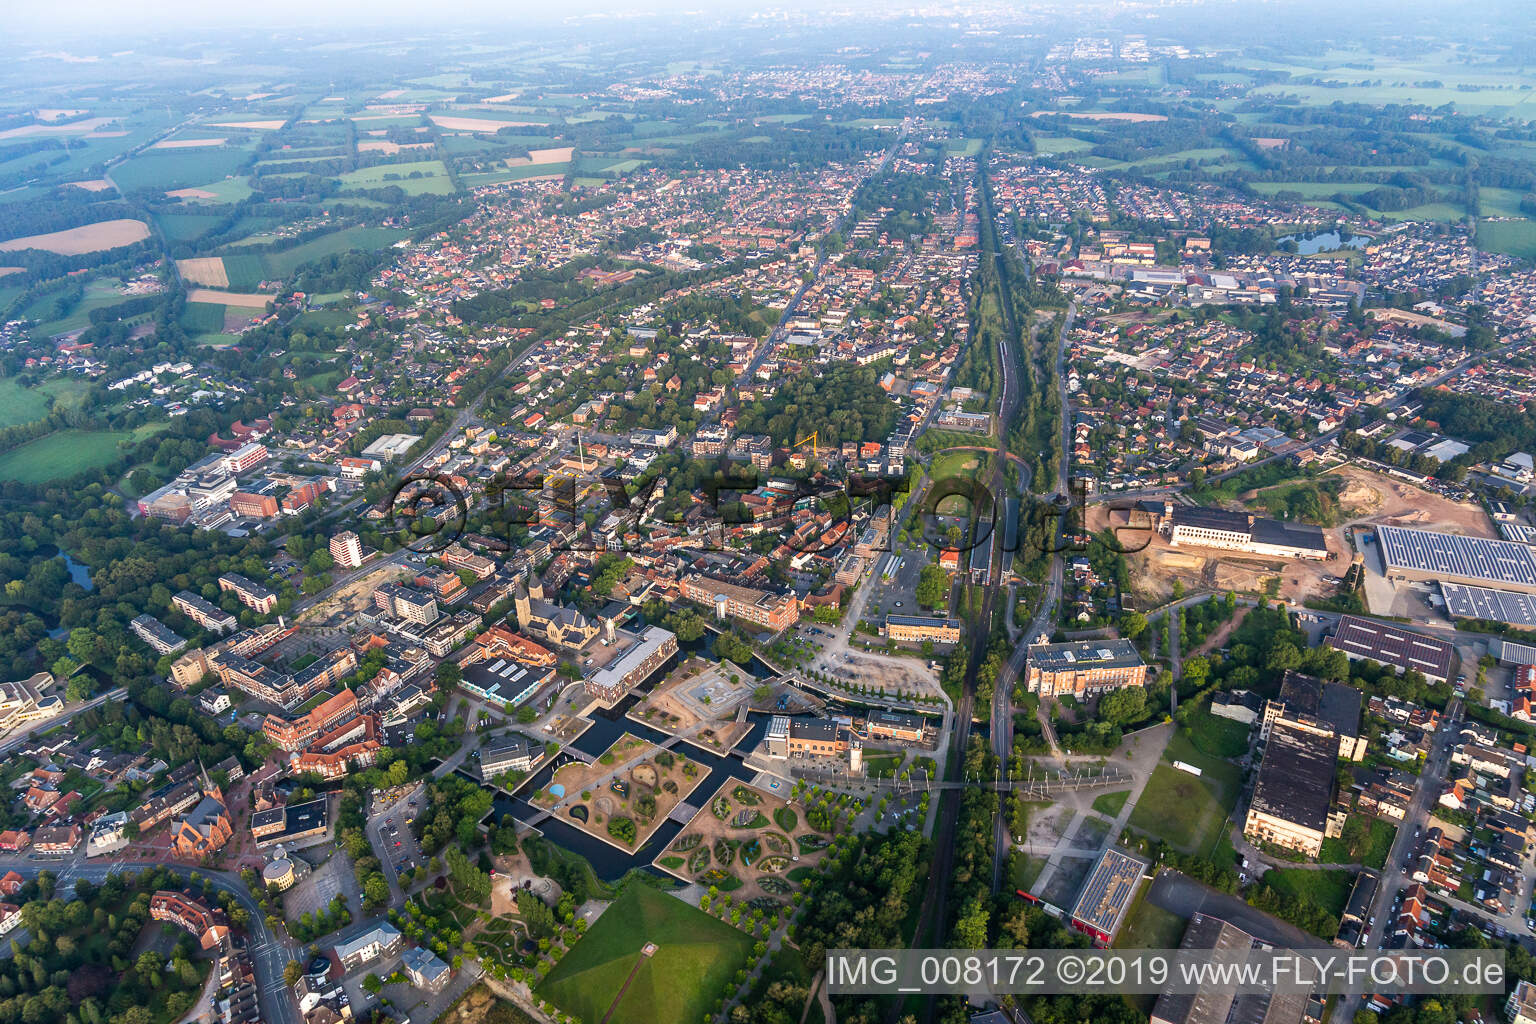 Aerial view of Gronau in the state North Rhine-Westphalia, Germany